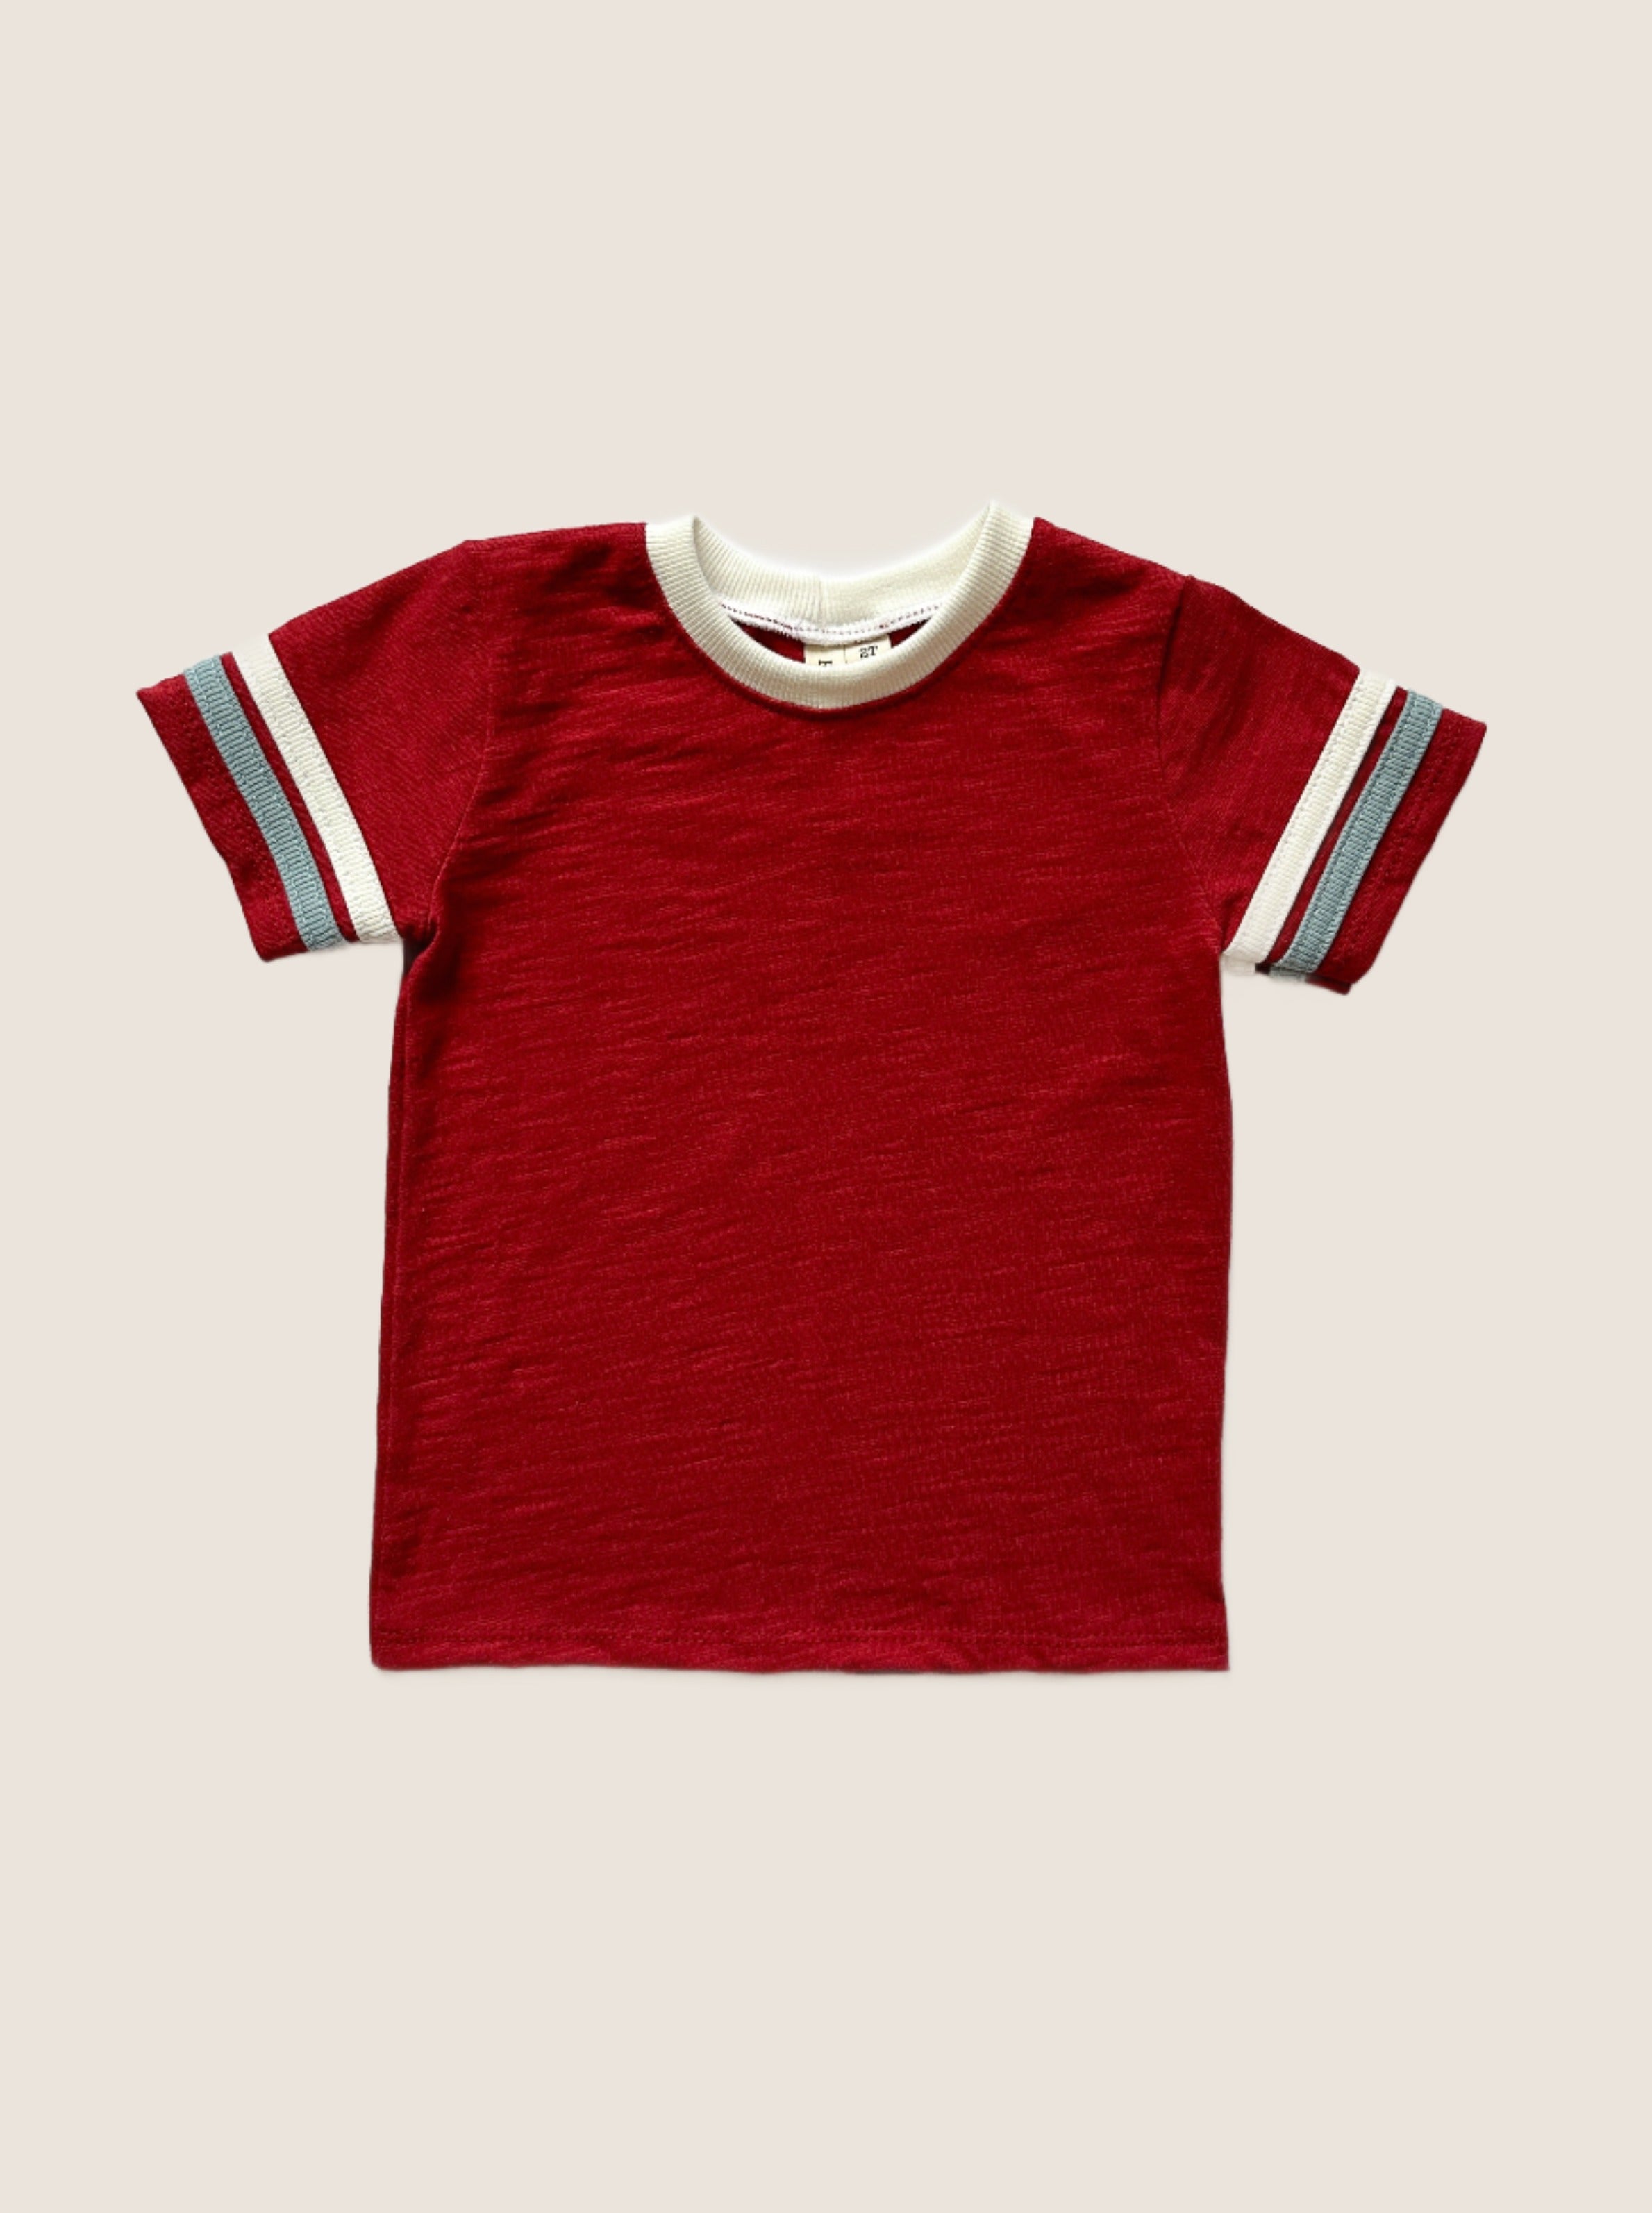 Retro t-shirt - scarlet w/sky blue